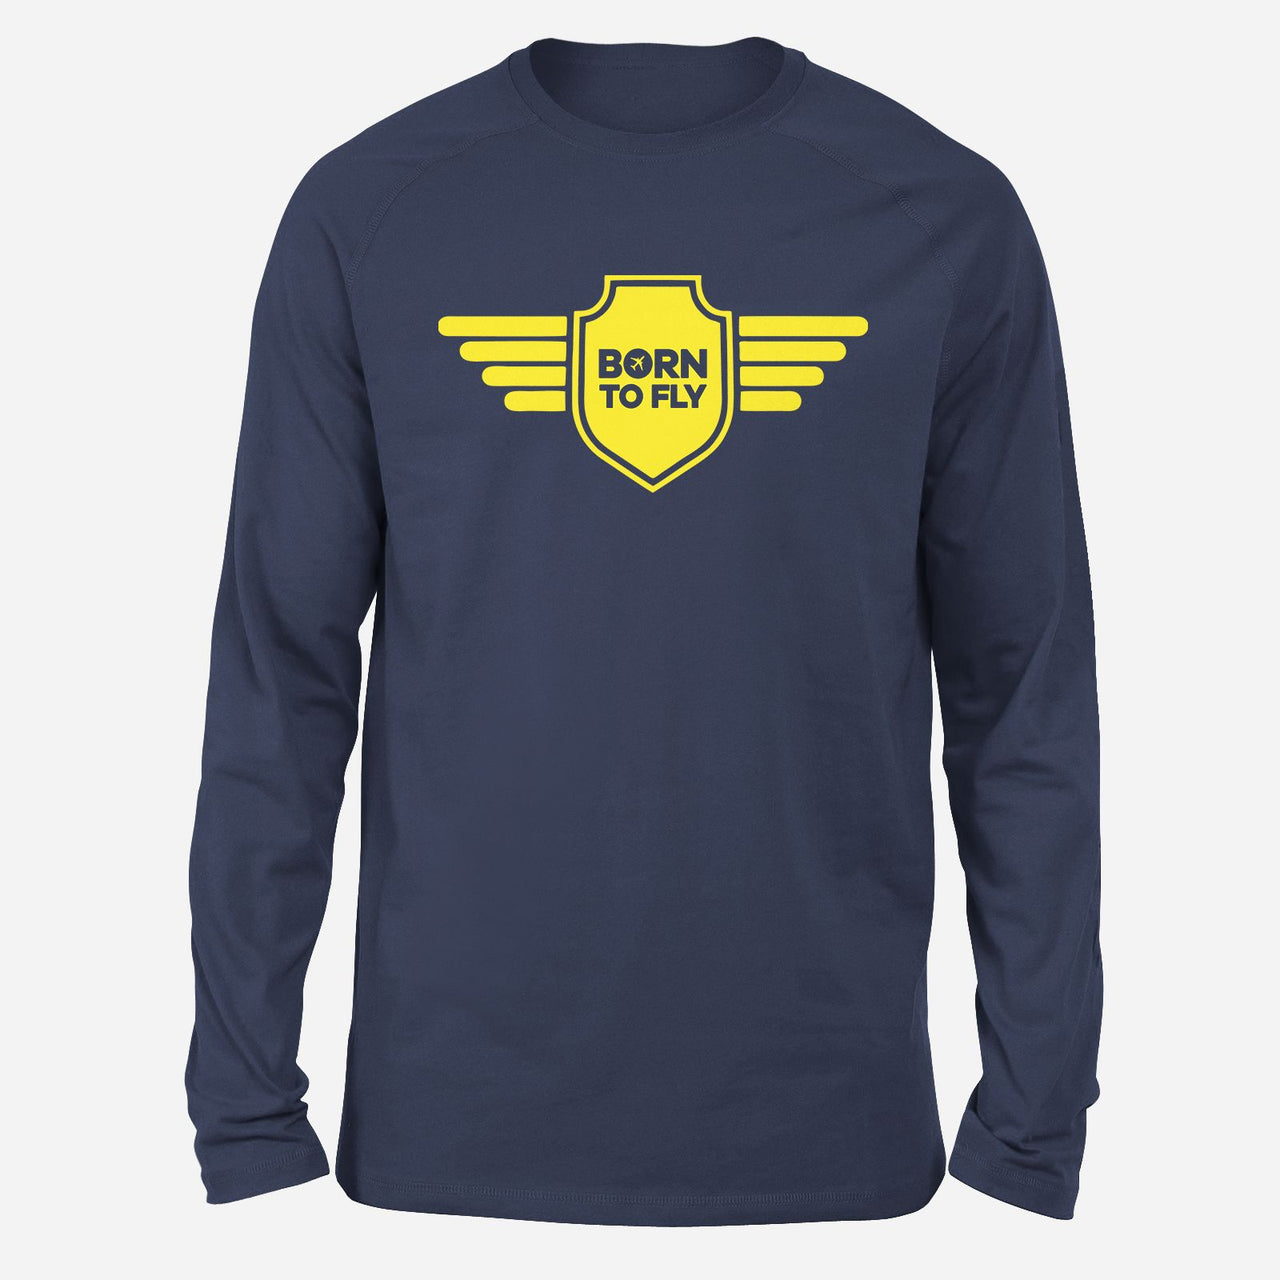 Born To Fly & Badge Designed Long-Sleeve T-Shirts